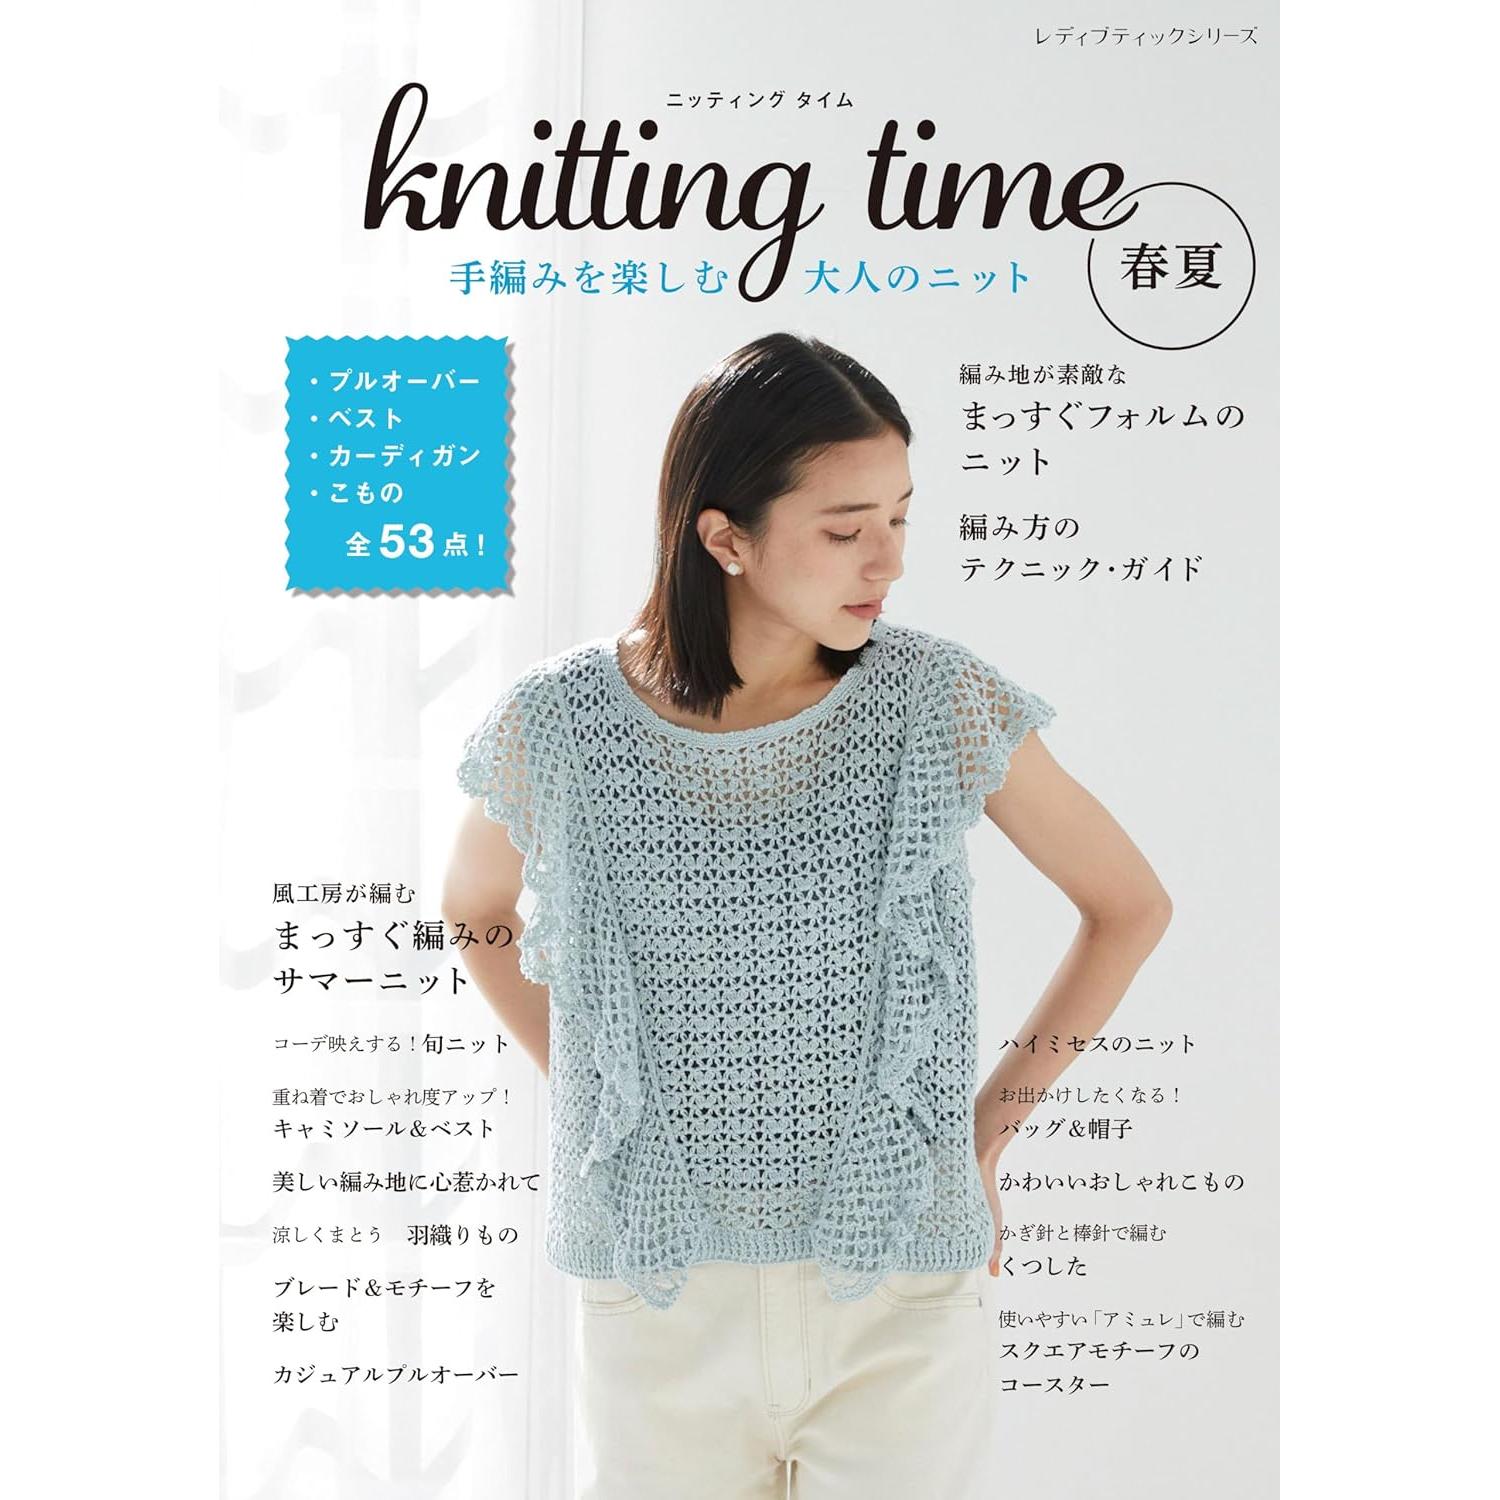 S8503 knitting time 春夏 手編み/ブティック社(冊)